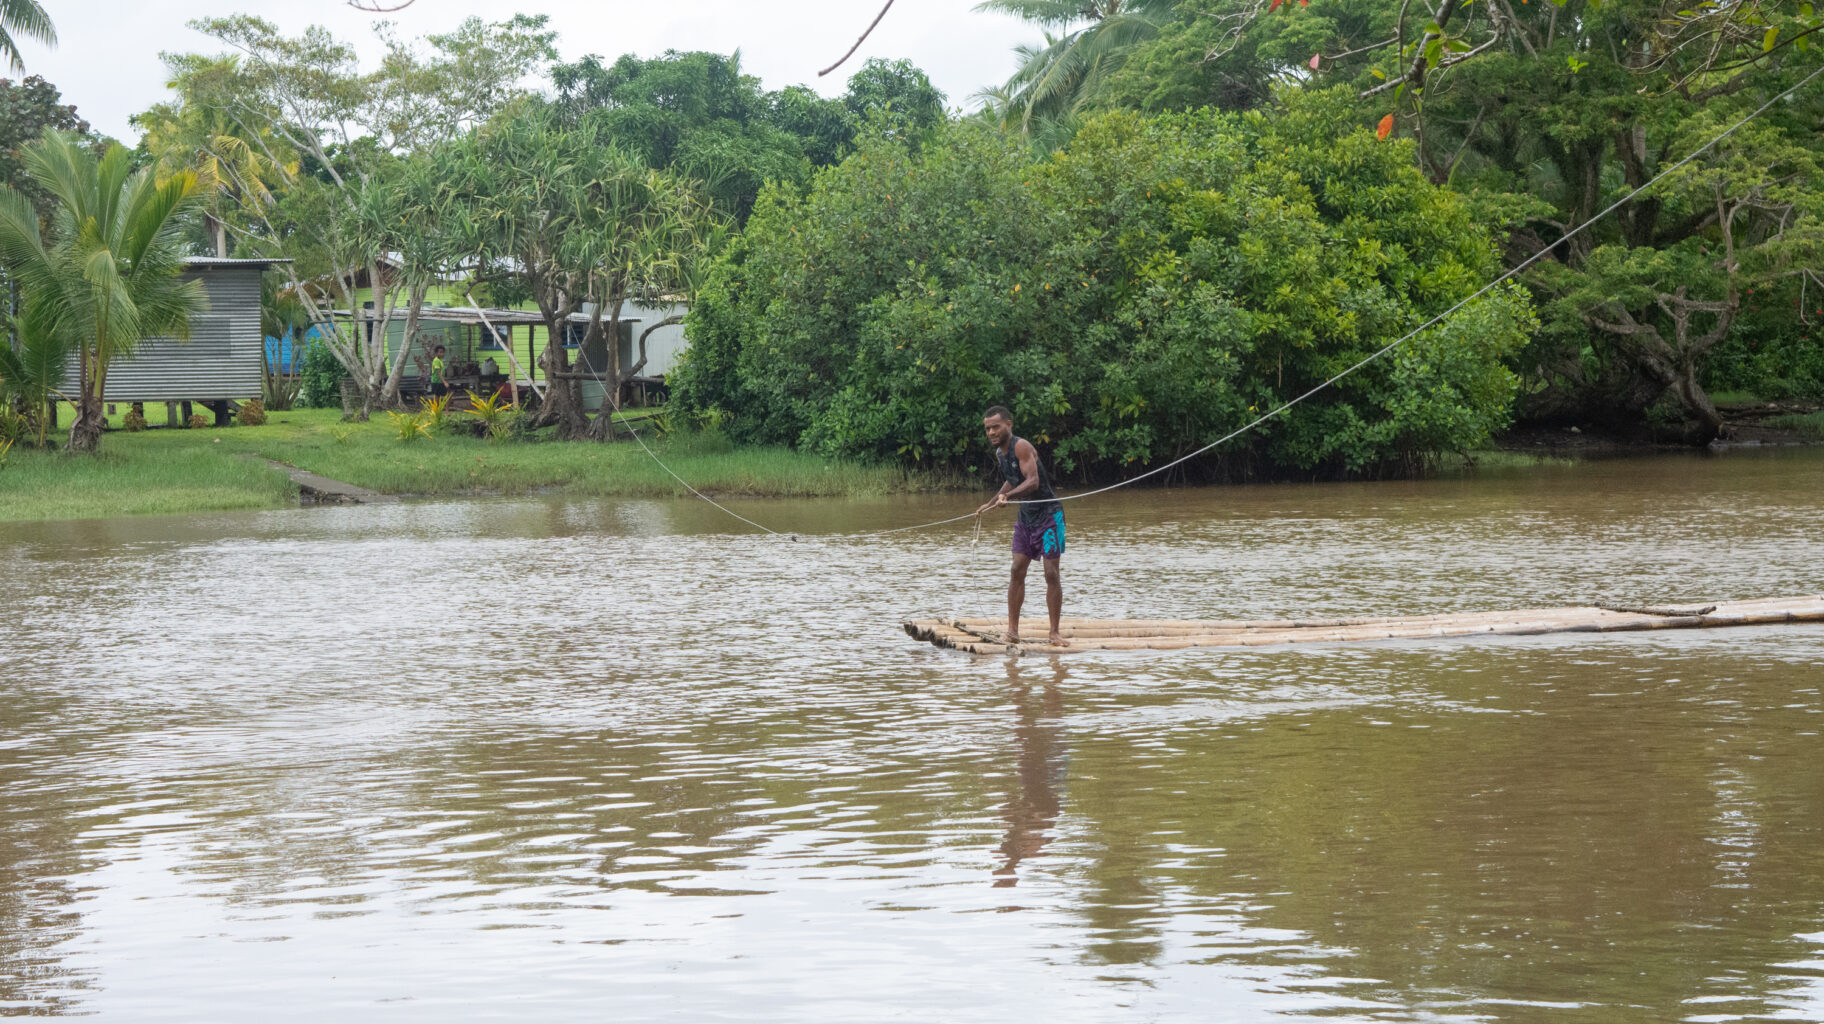 Fijian man pulls bamboo raft across river